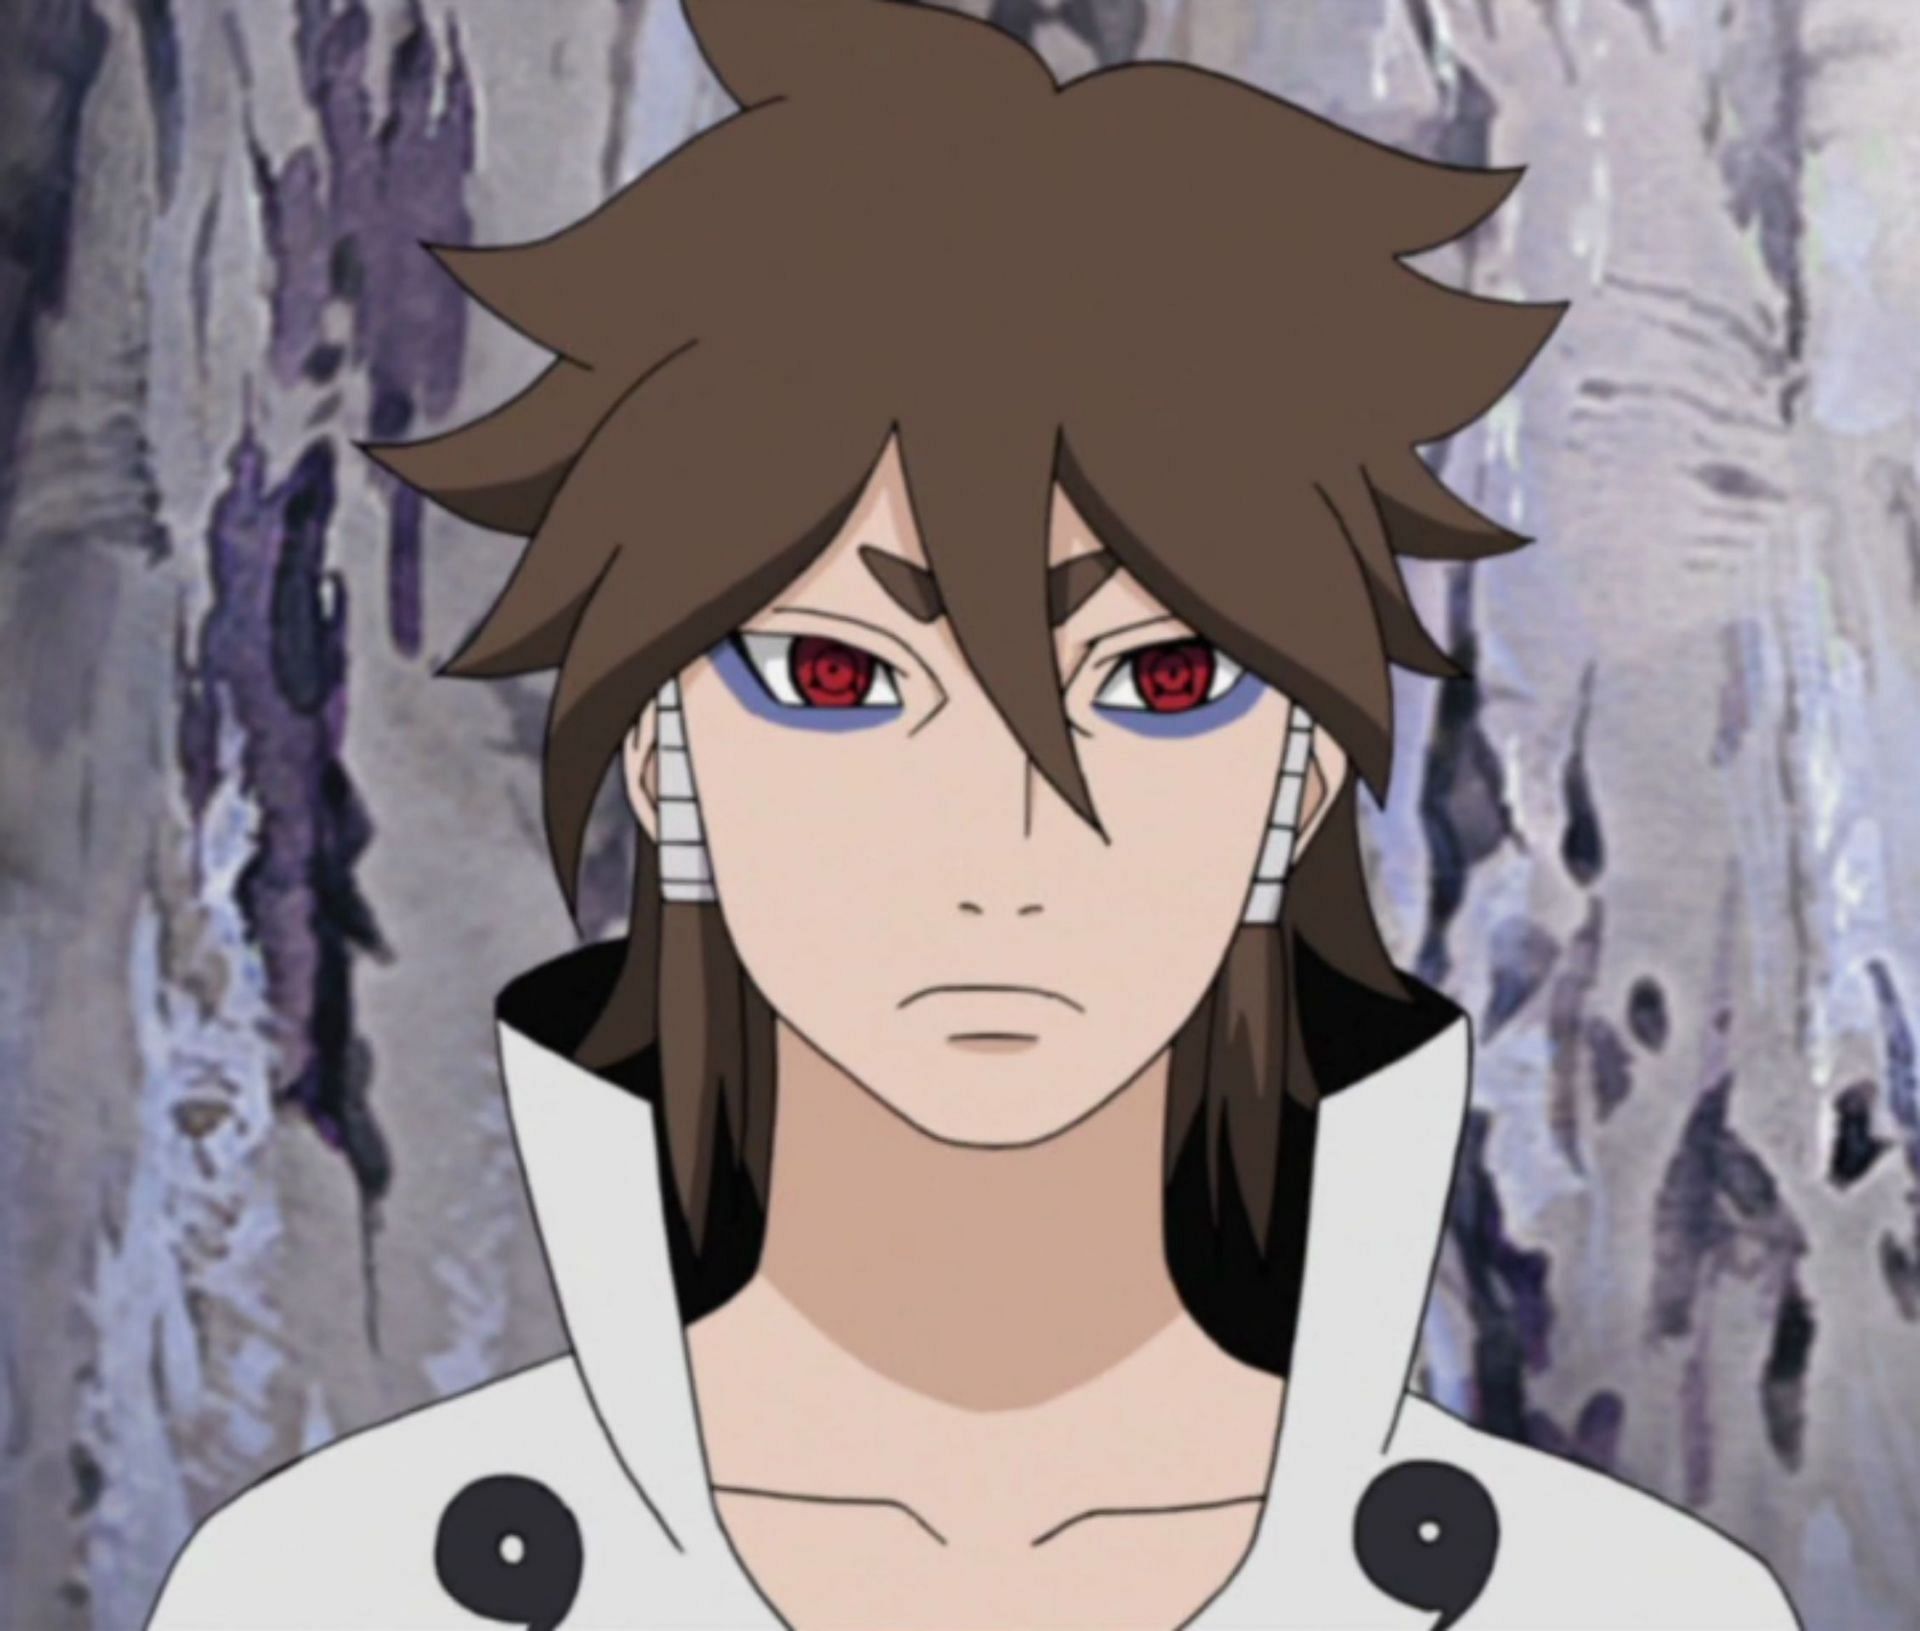 Indra Otsutsuki as he appears in Naruto Shippuden (Image via Pierrot)